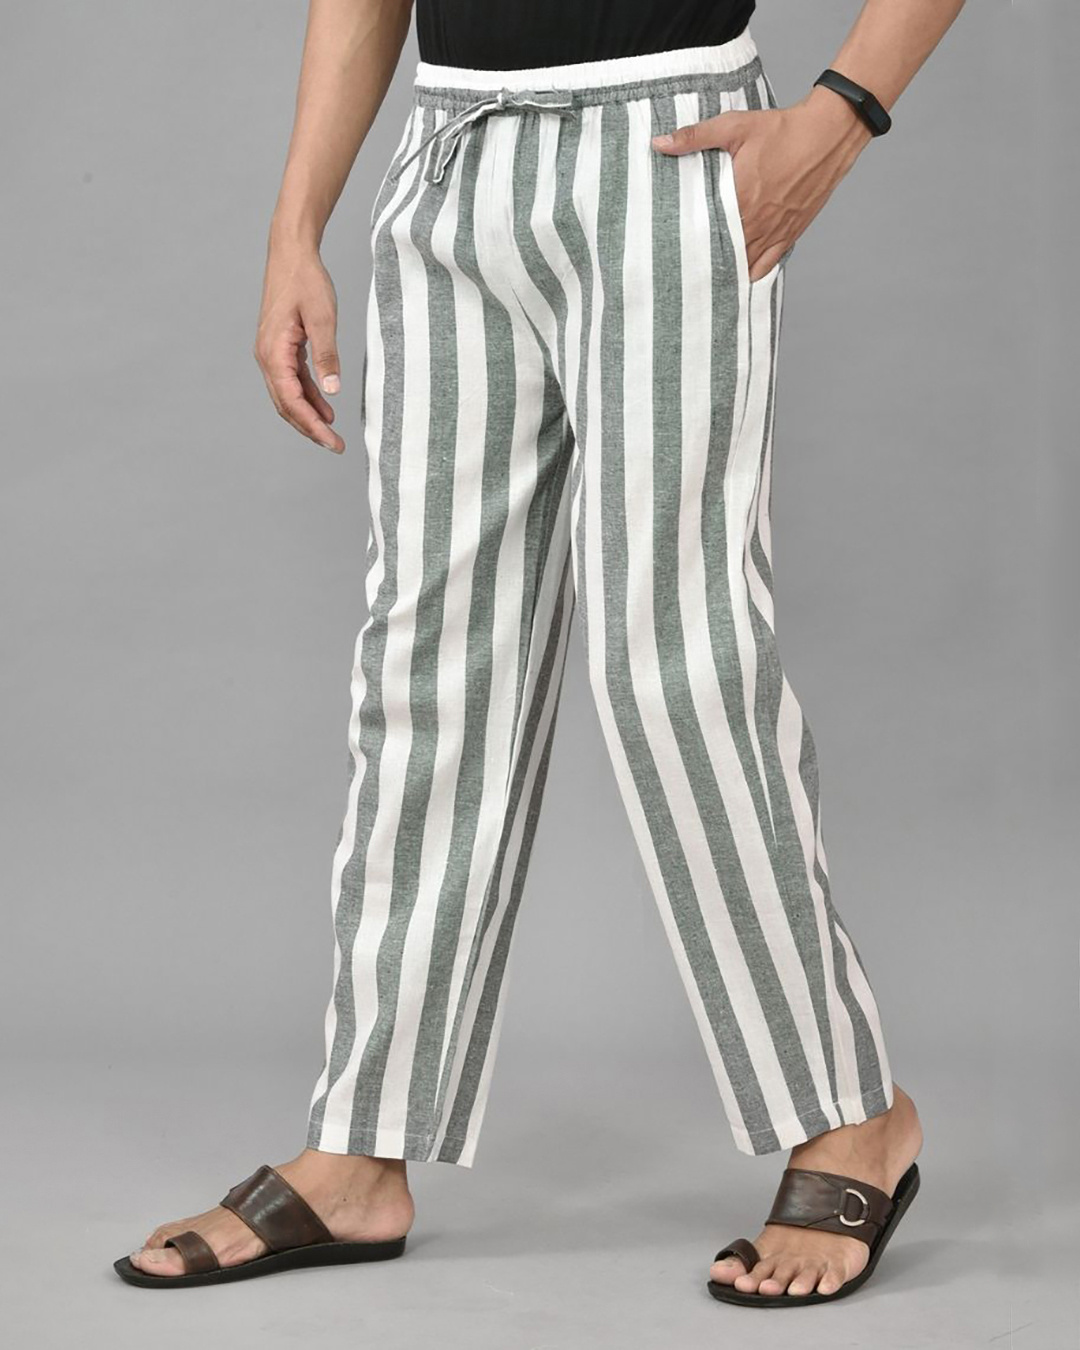 Buy Men's White Striped Casual Pants Online at Bewakoof